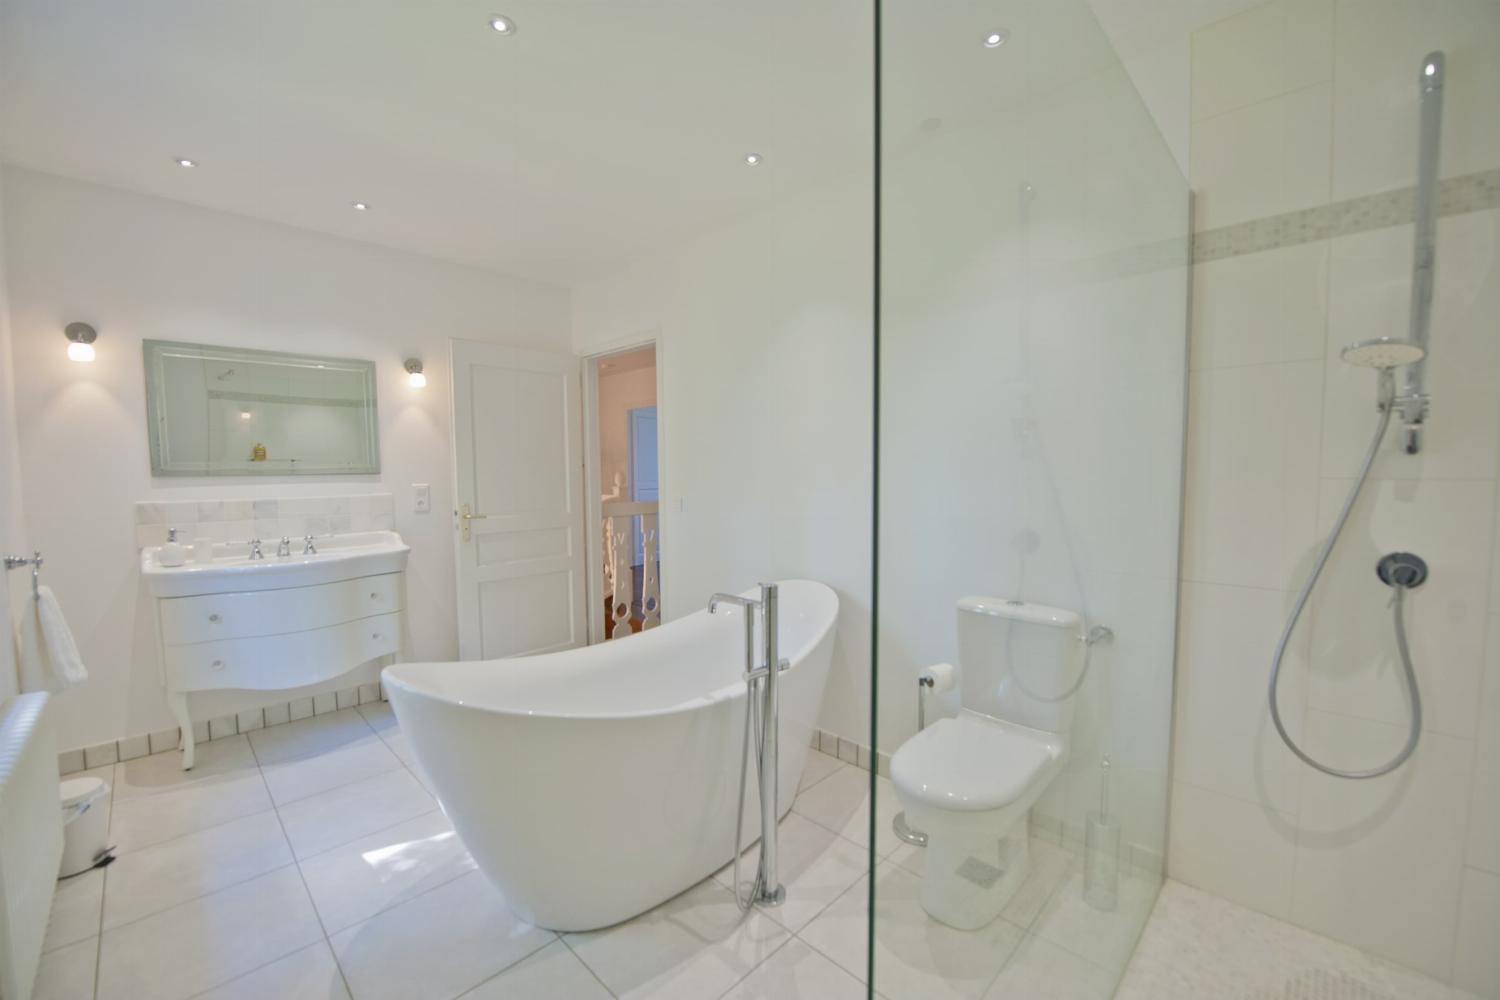 Bathroom | Rental home in Dordogne